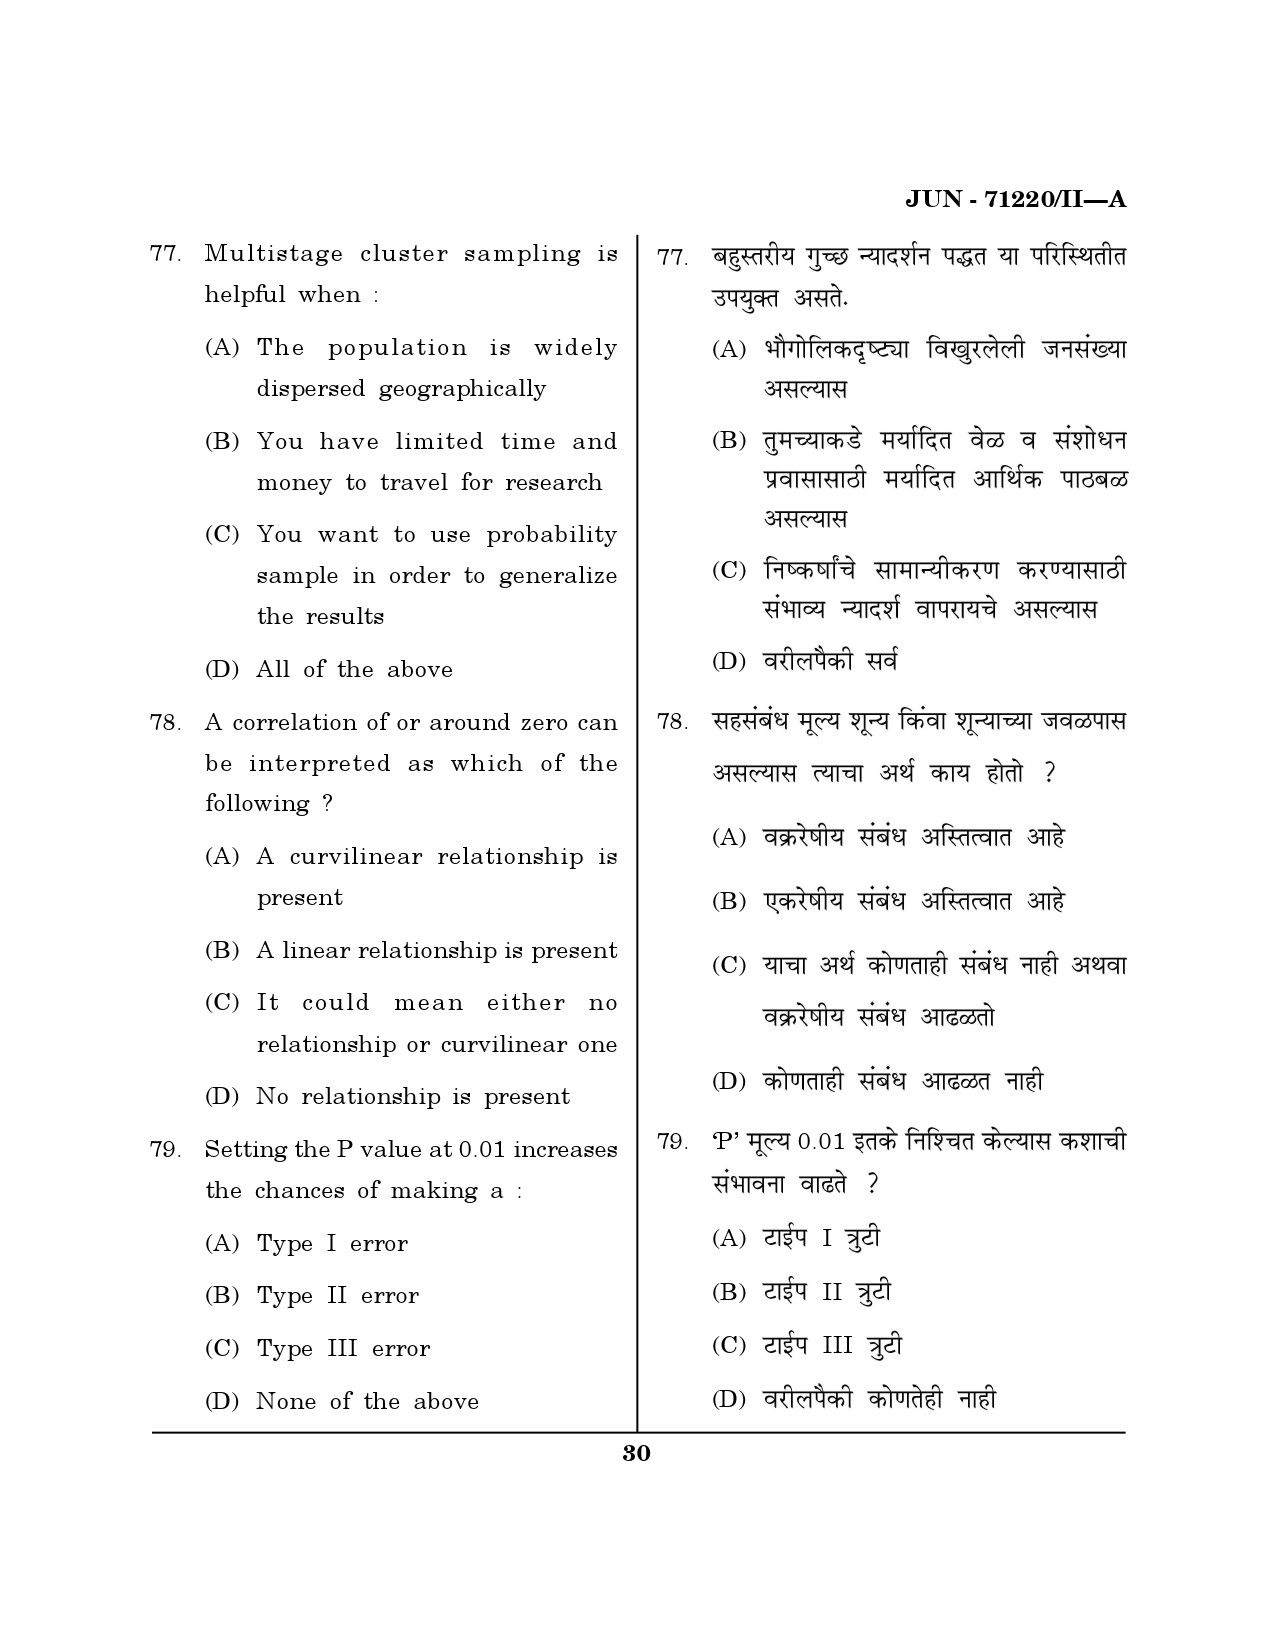 Maharashtra SET Physical Education Question Paper II June 2020 29